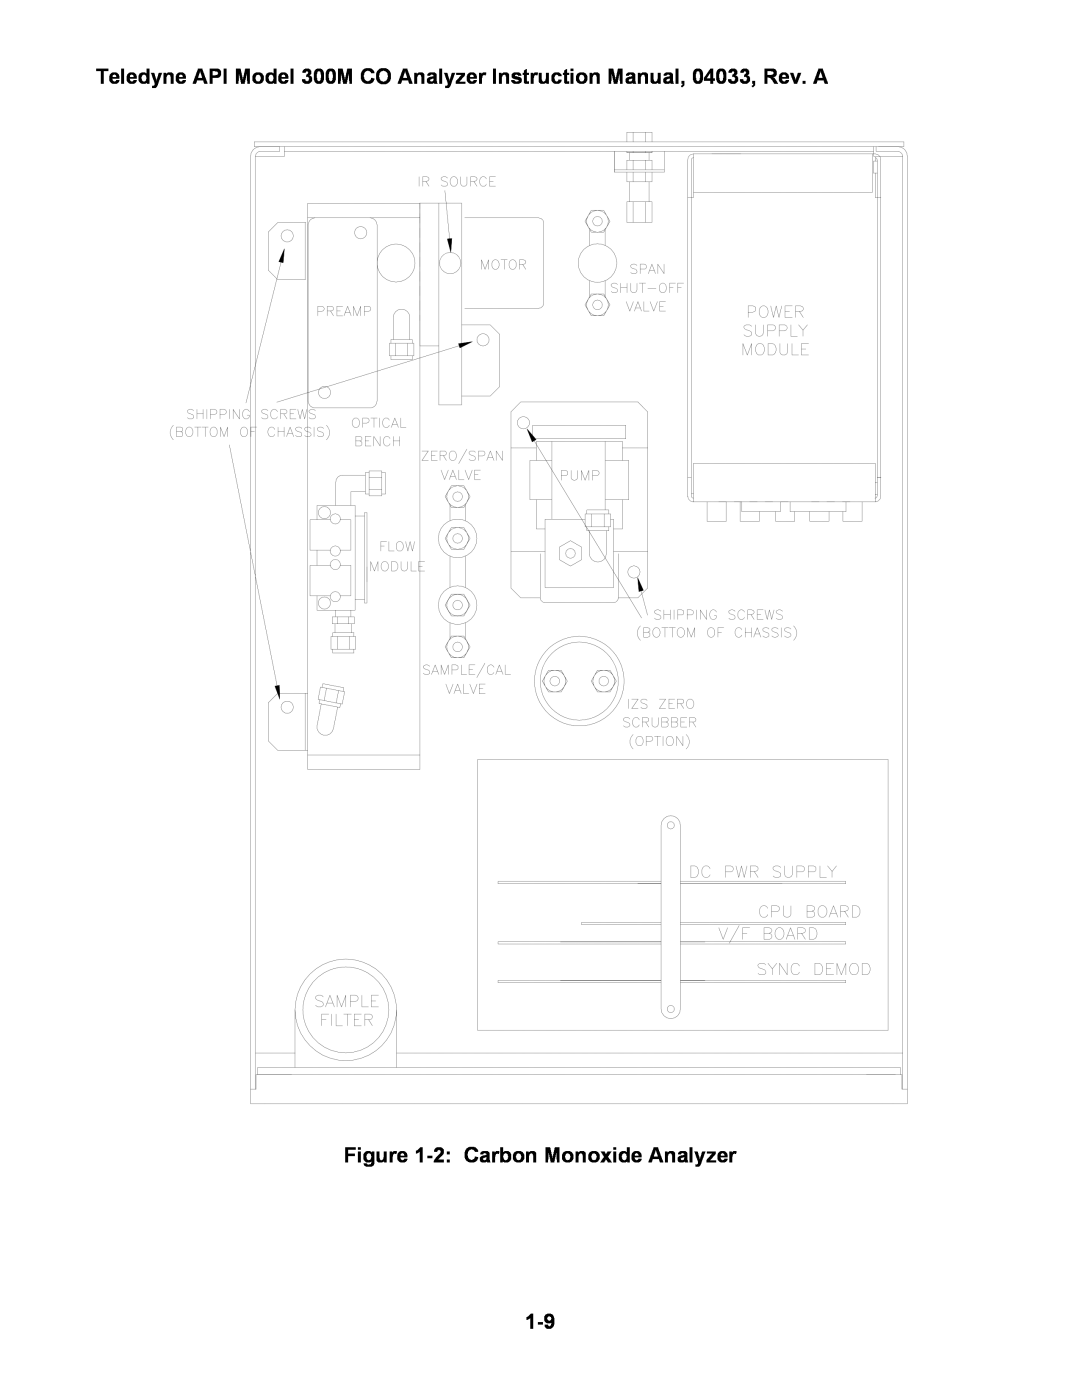 Teledyne 300M instruction manual 2 Carbon Monoxide Analyzer 